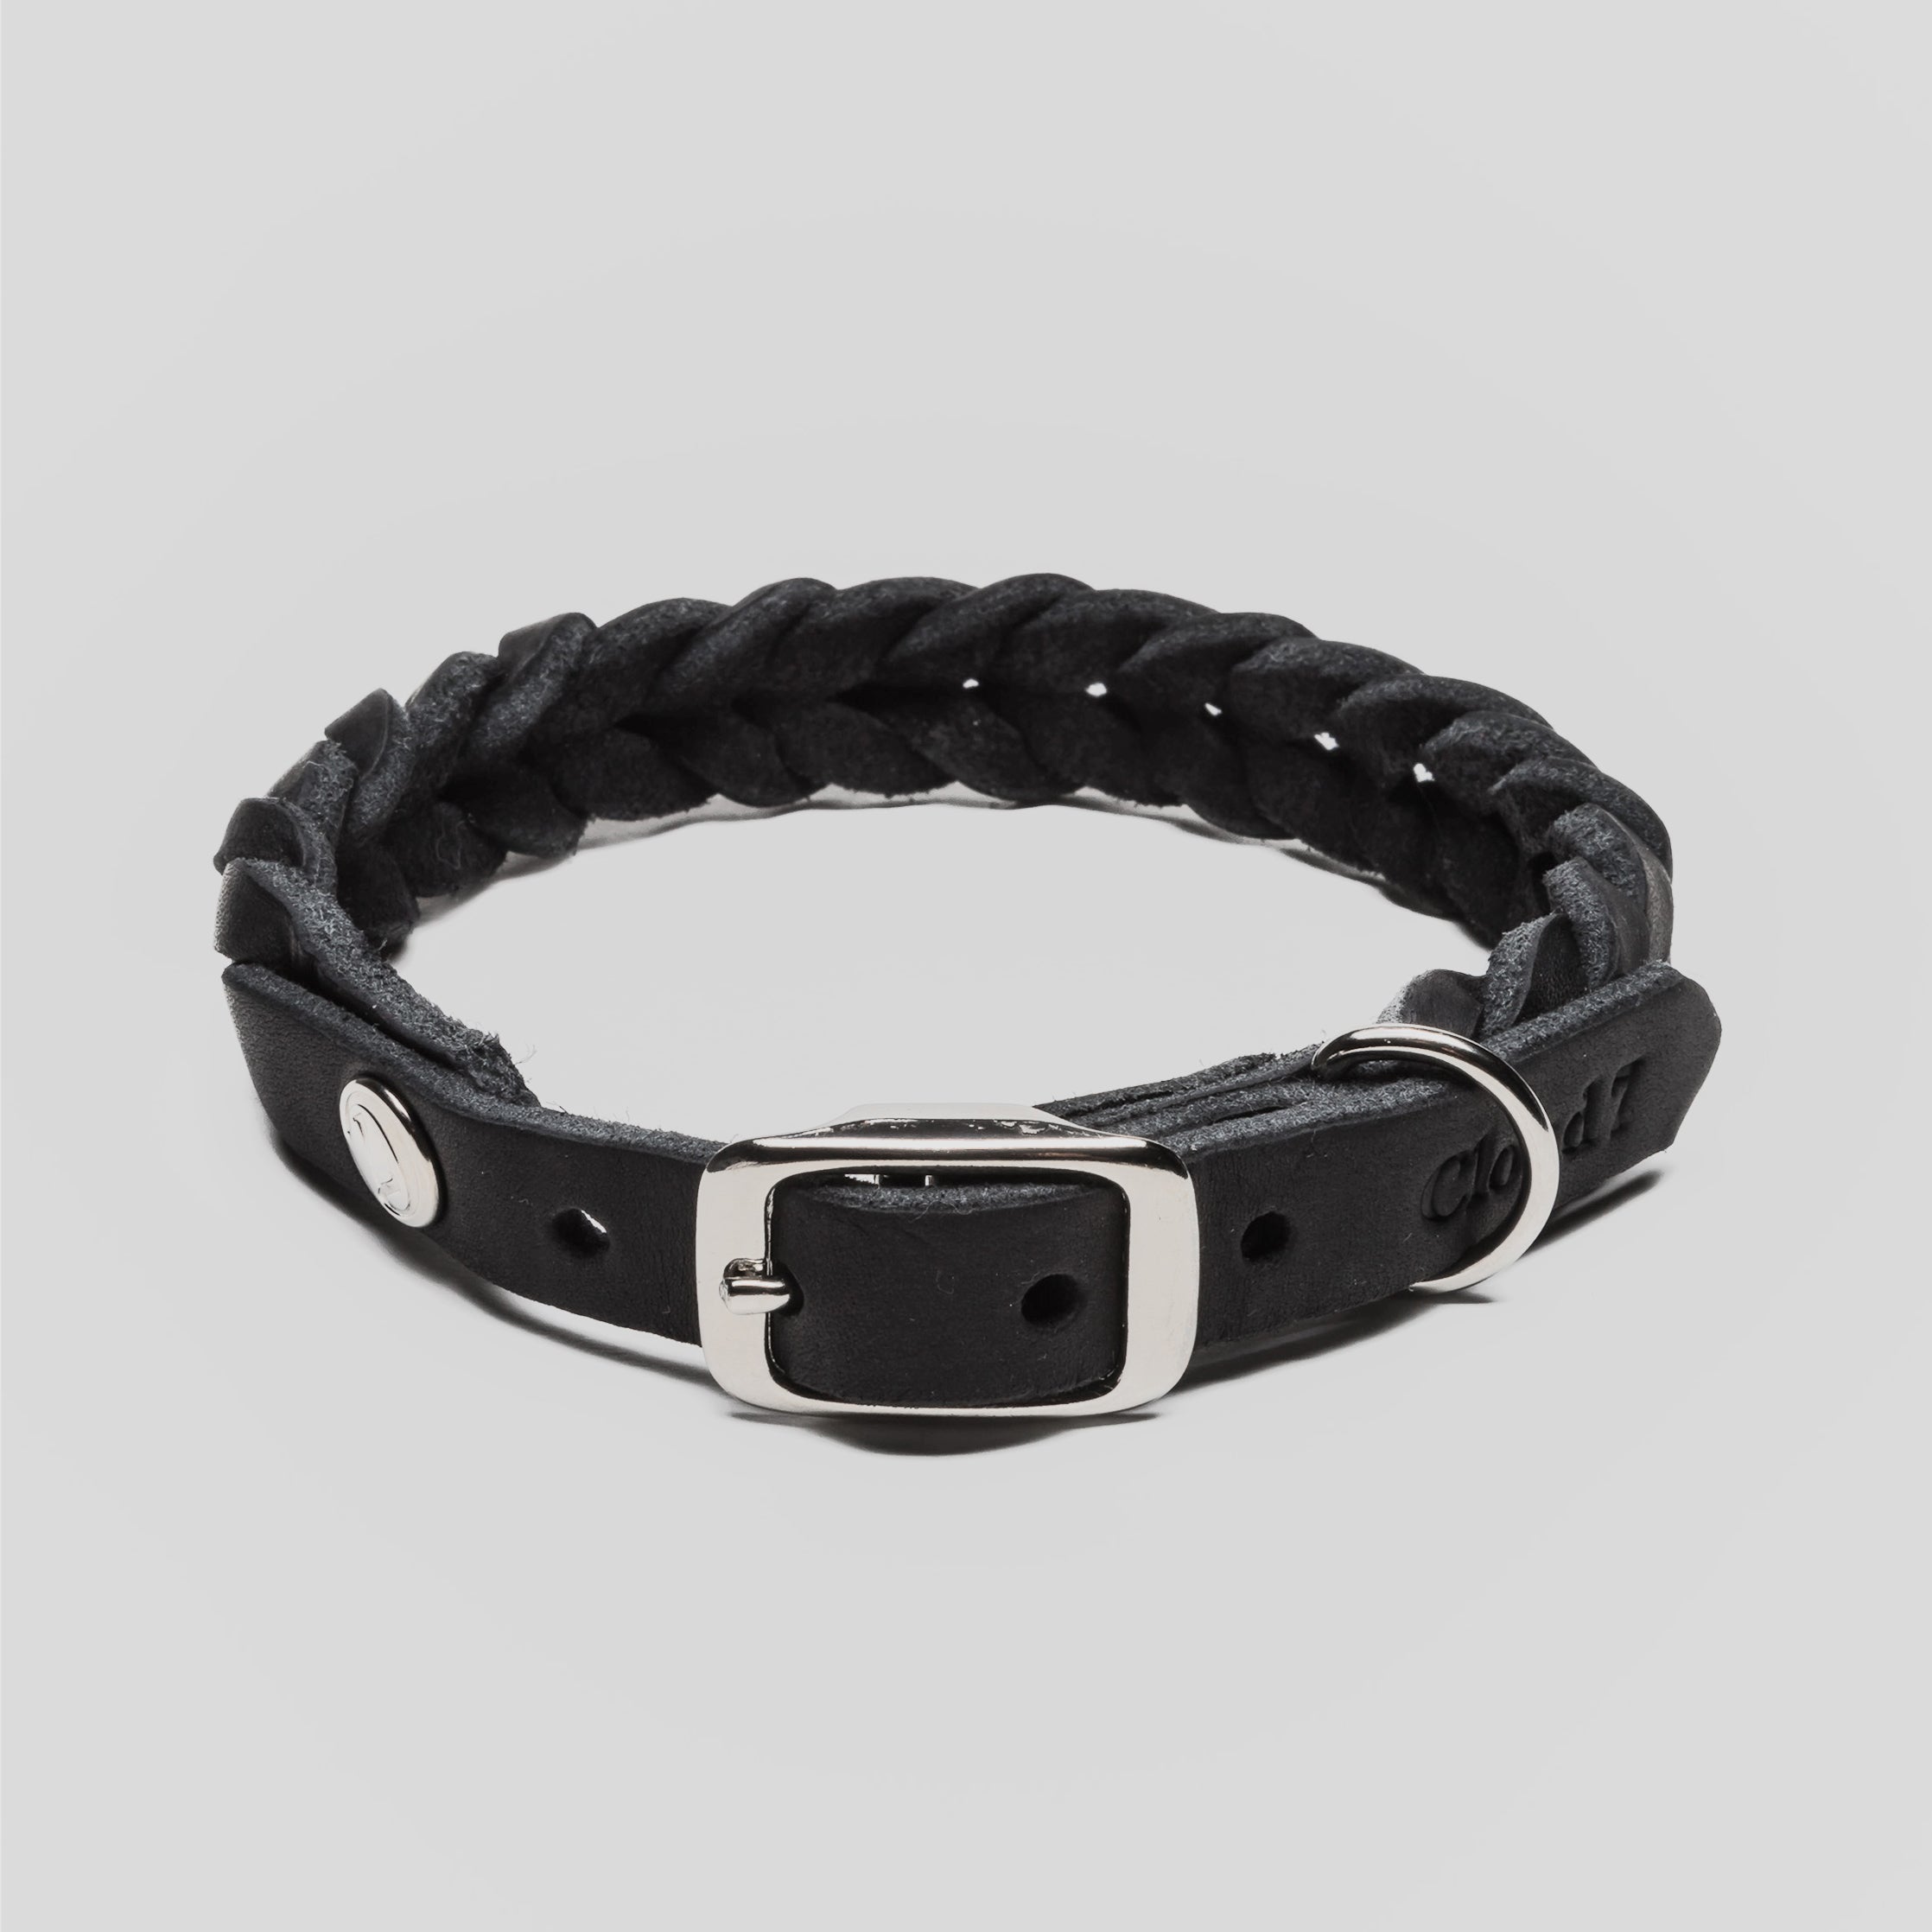 Cloud7 Dog Collar Central Park Black Leather